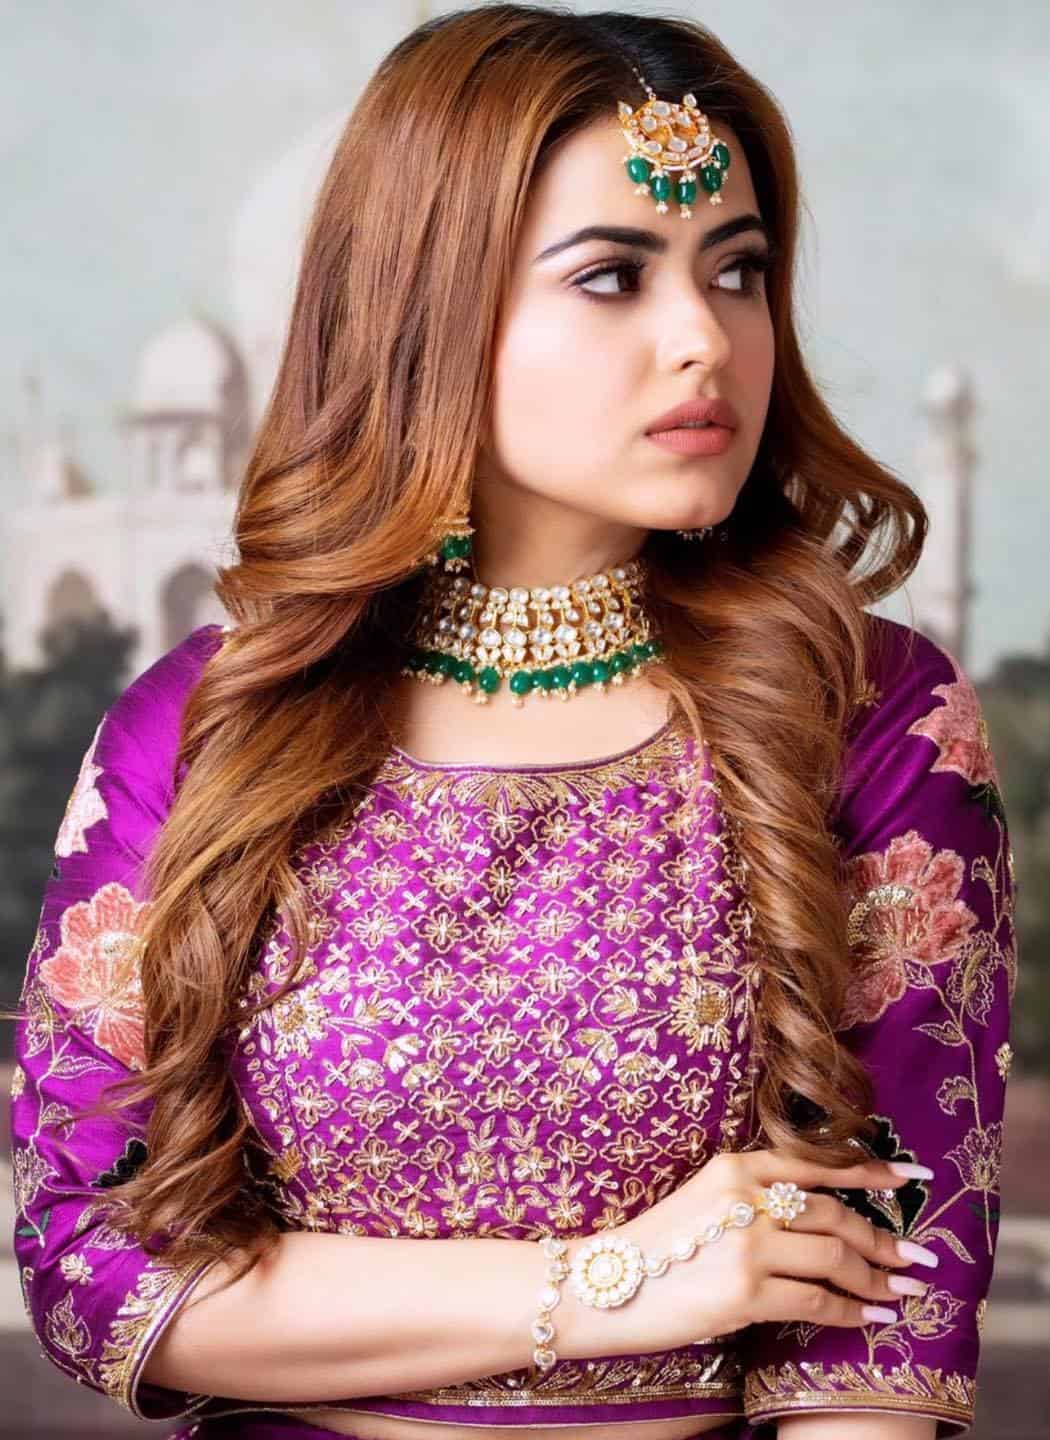 100+] Punjabi Girls DP, Pic, Photo, Images & Pictures (HD)